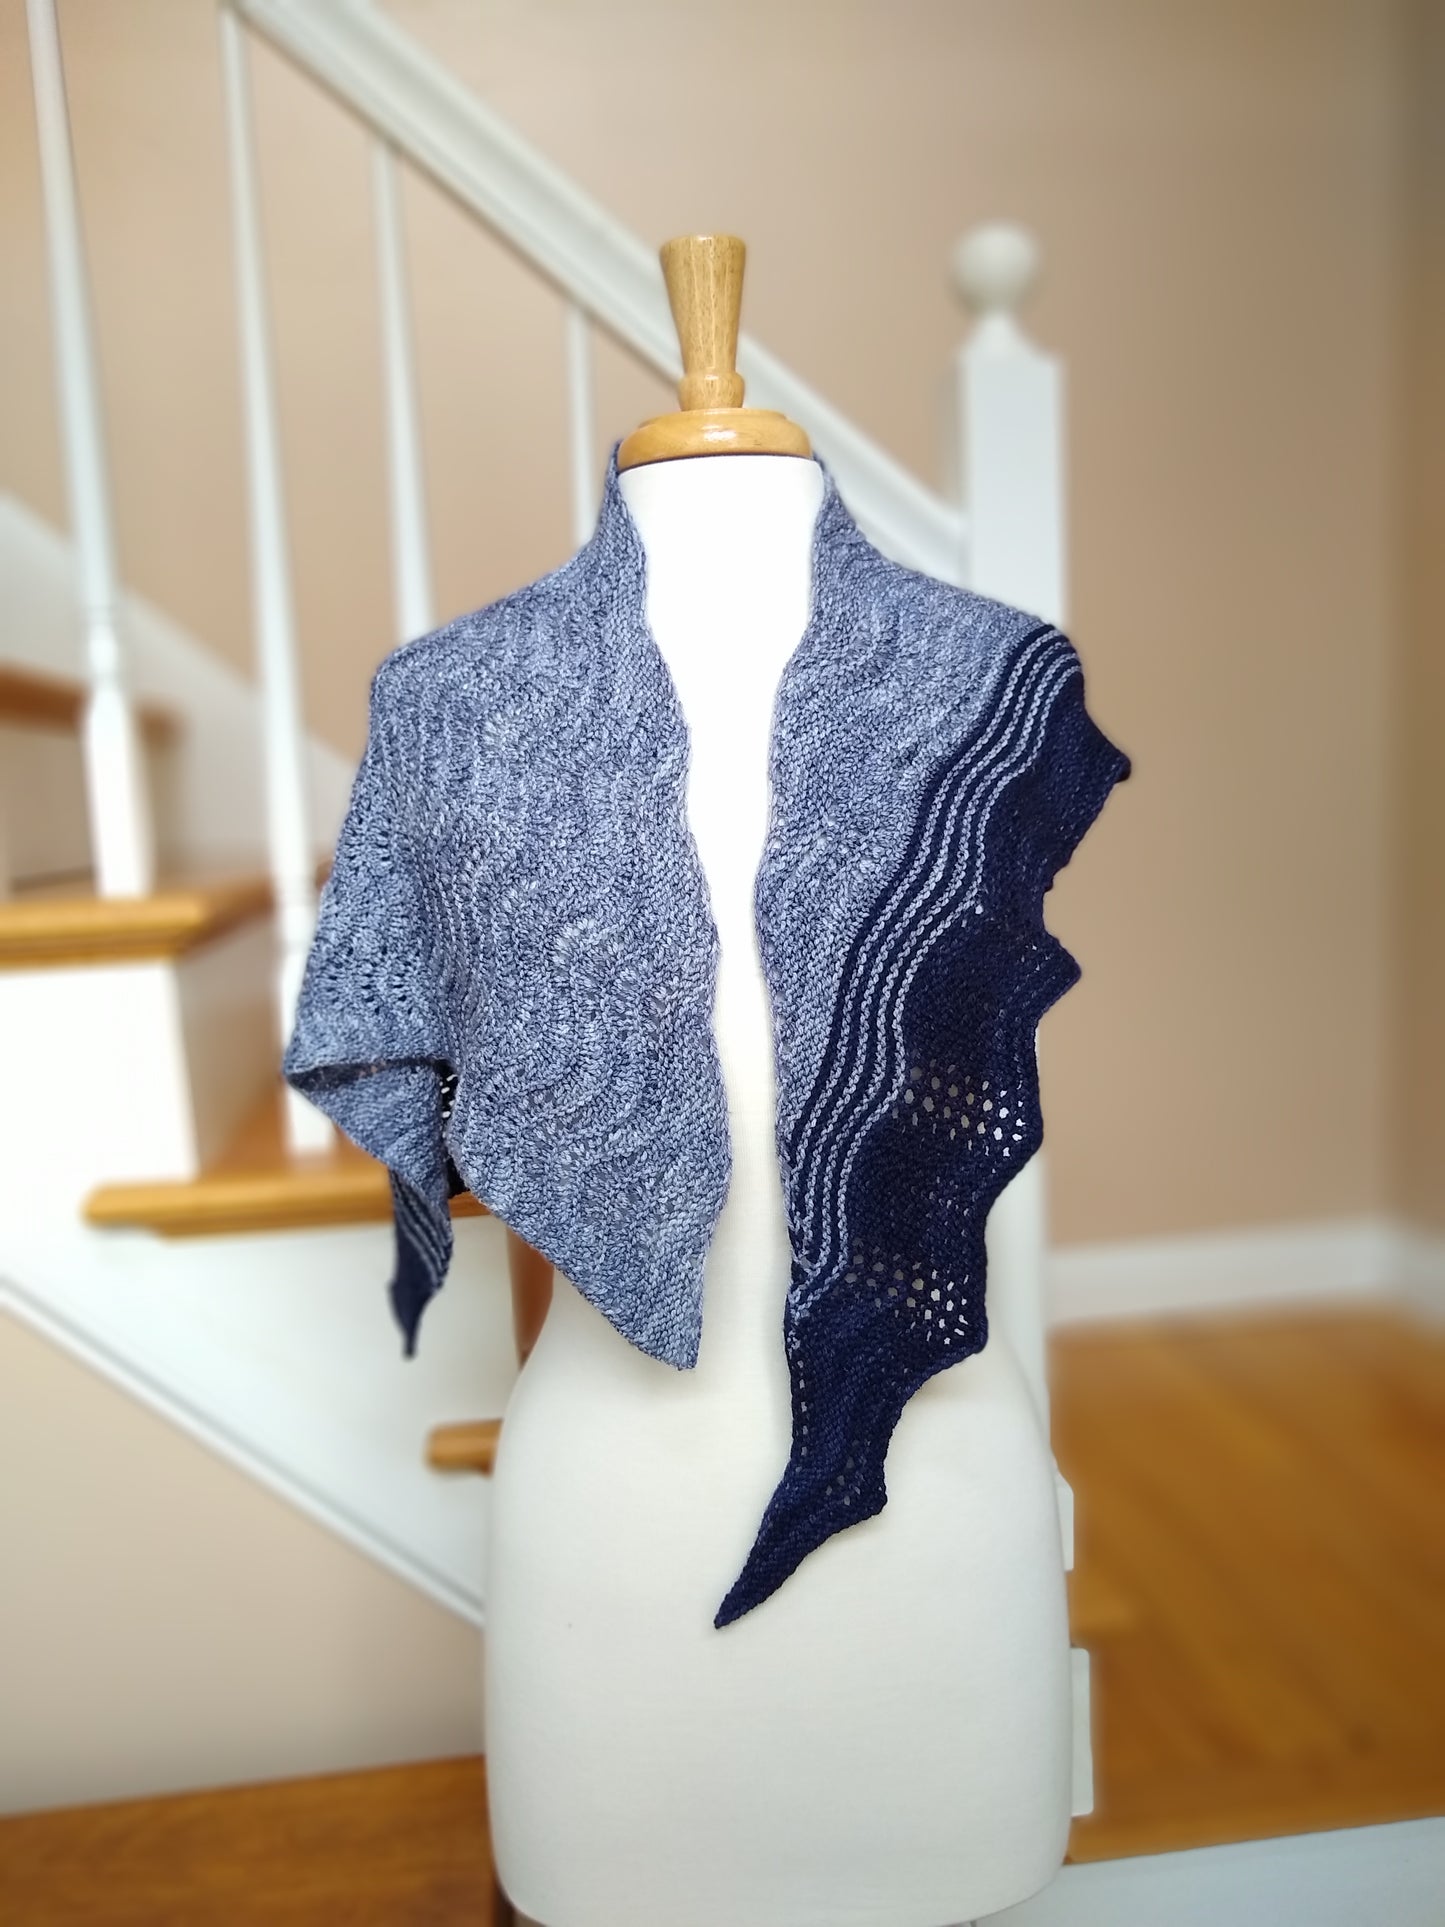 Simple Waves Shawl Knitting Pattern